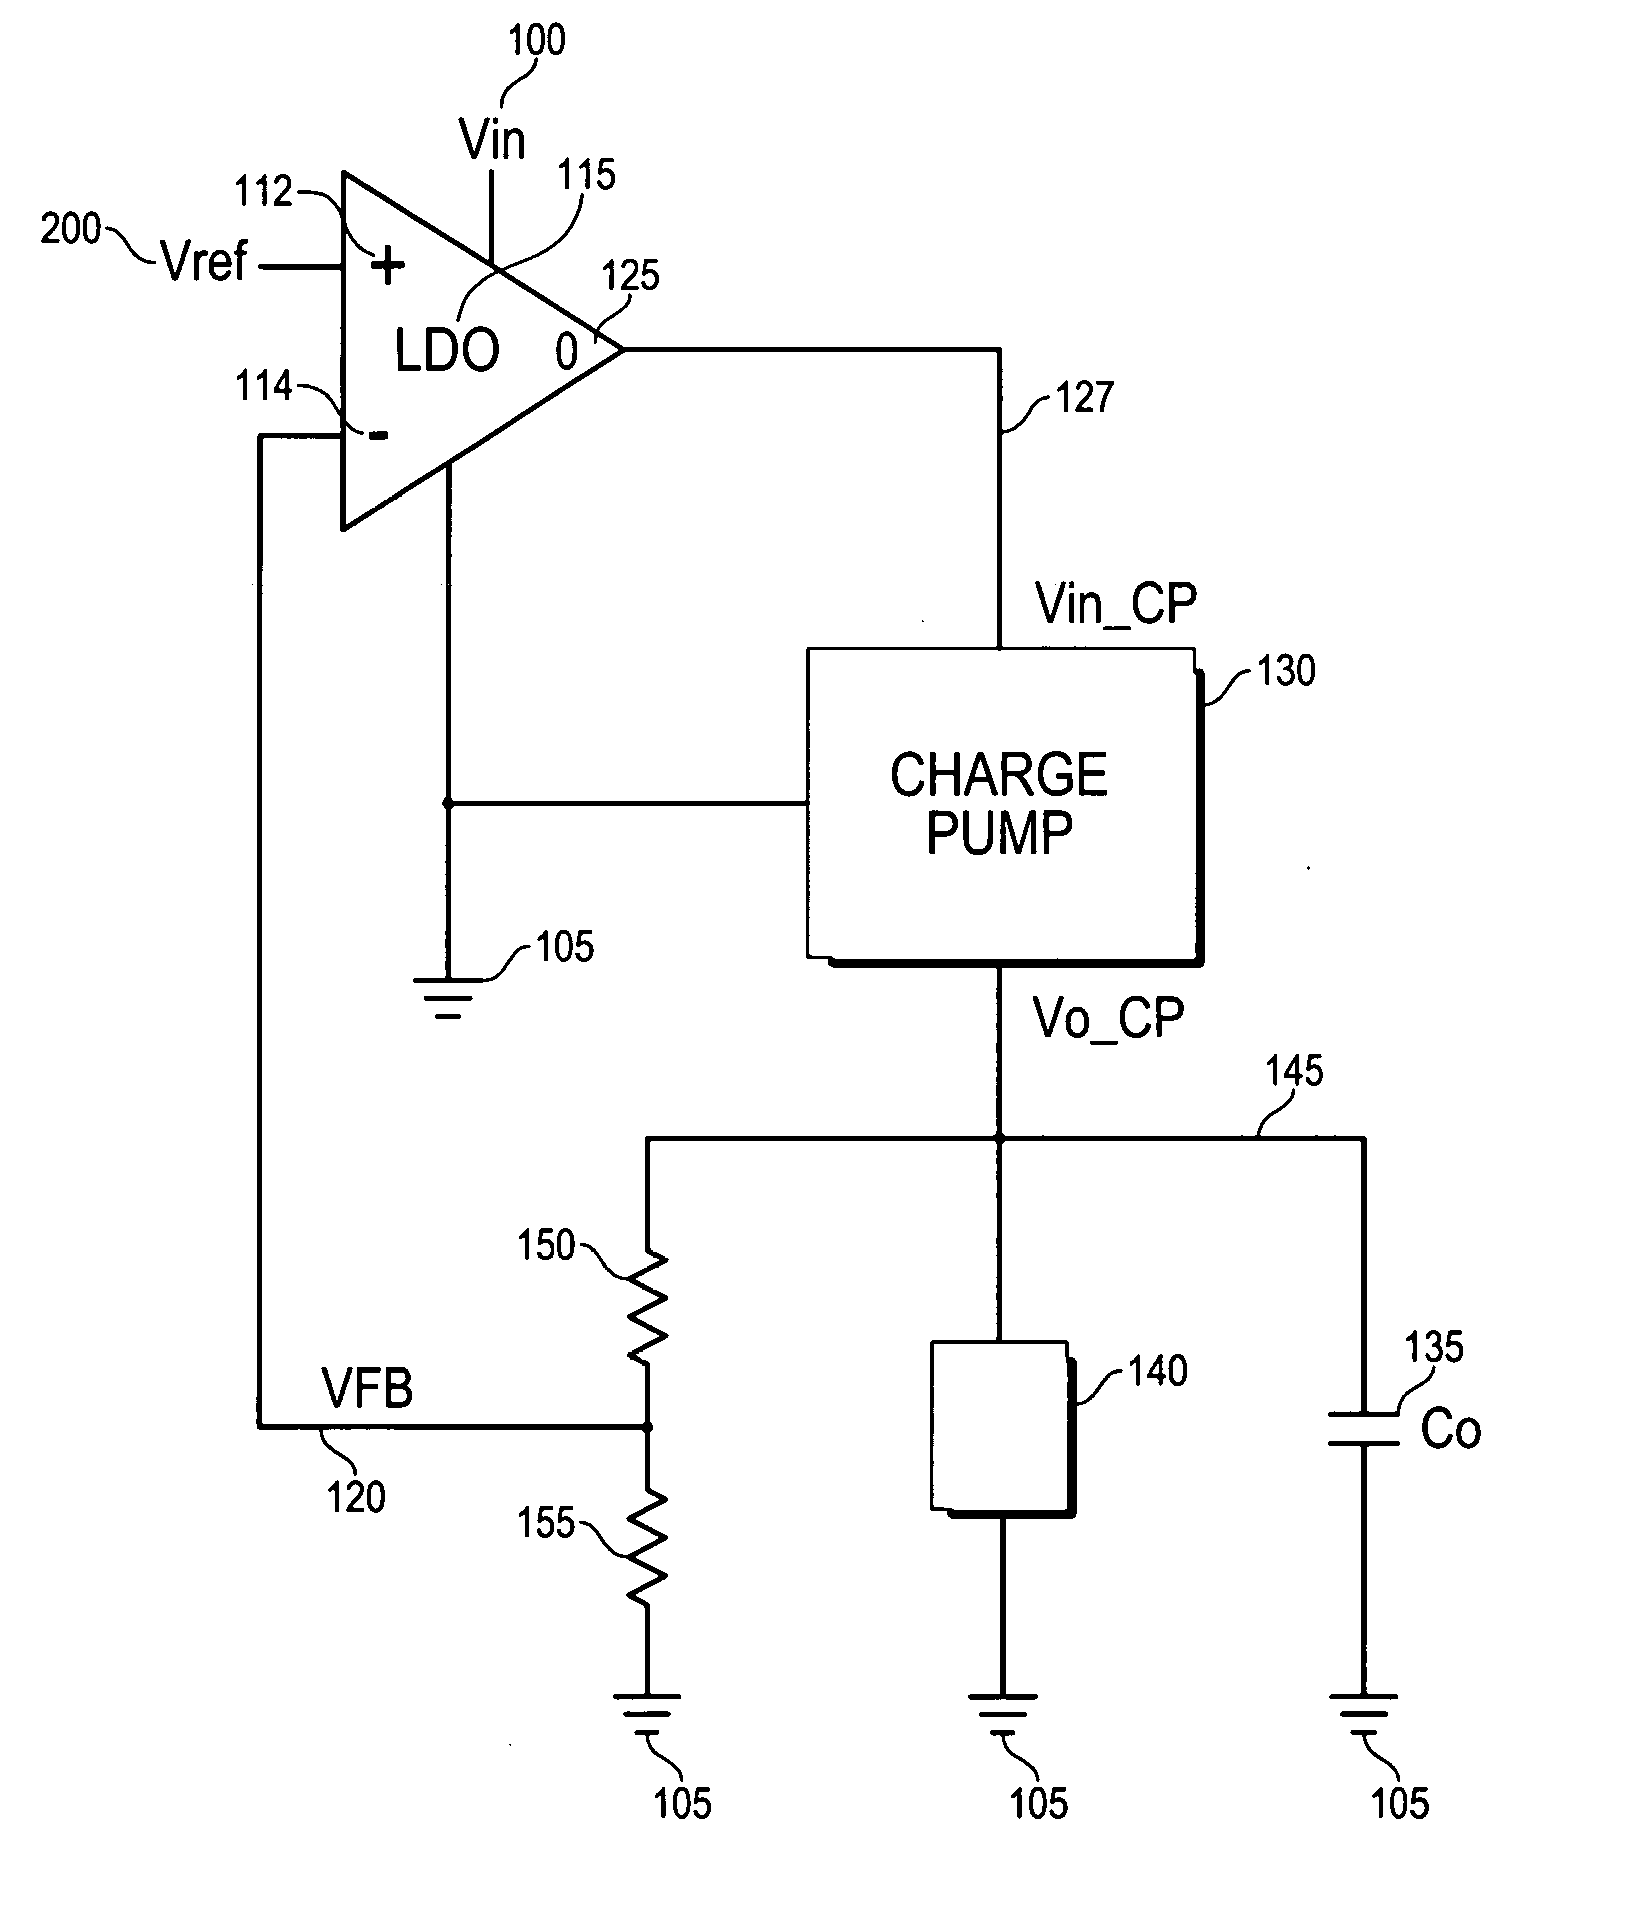 Regulating charge pump